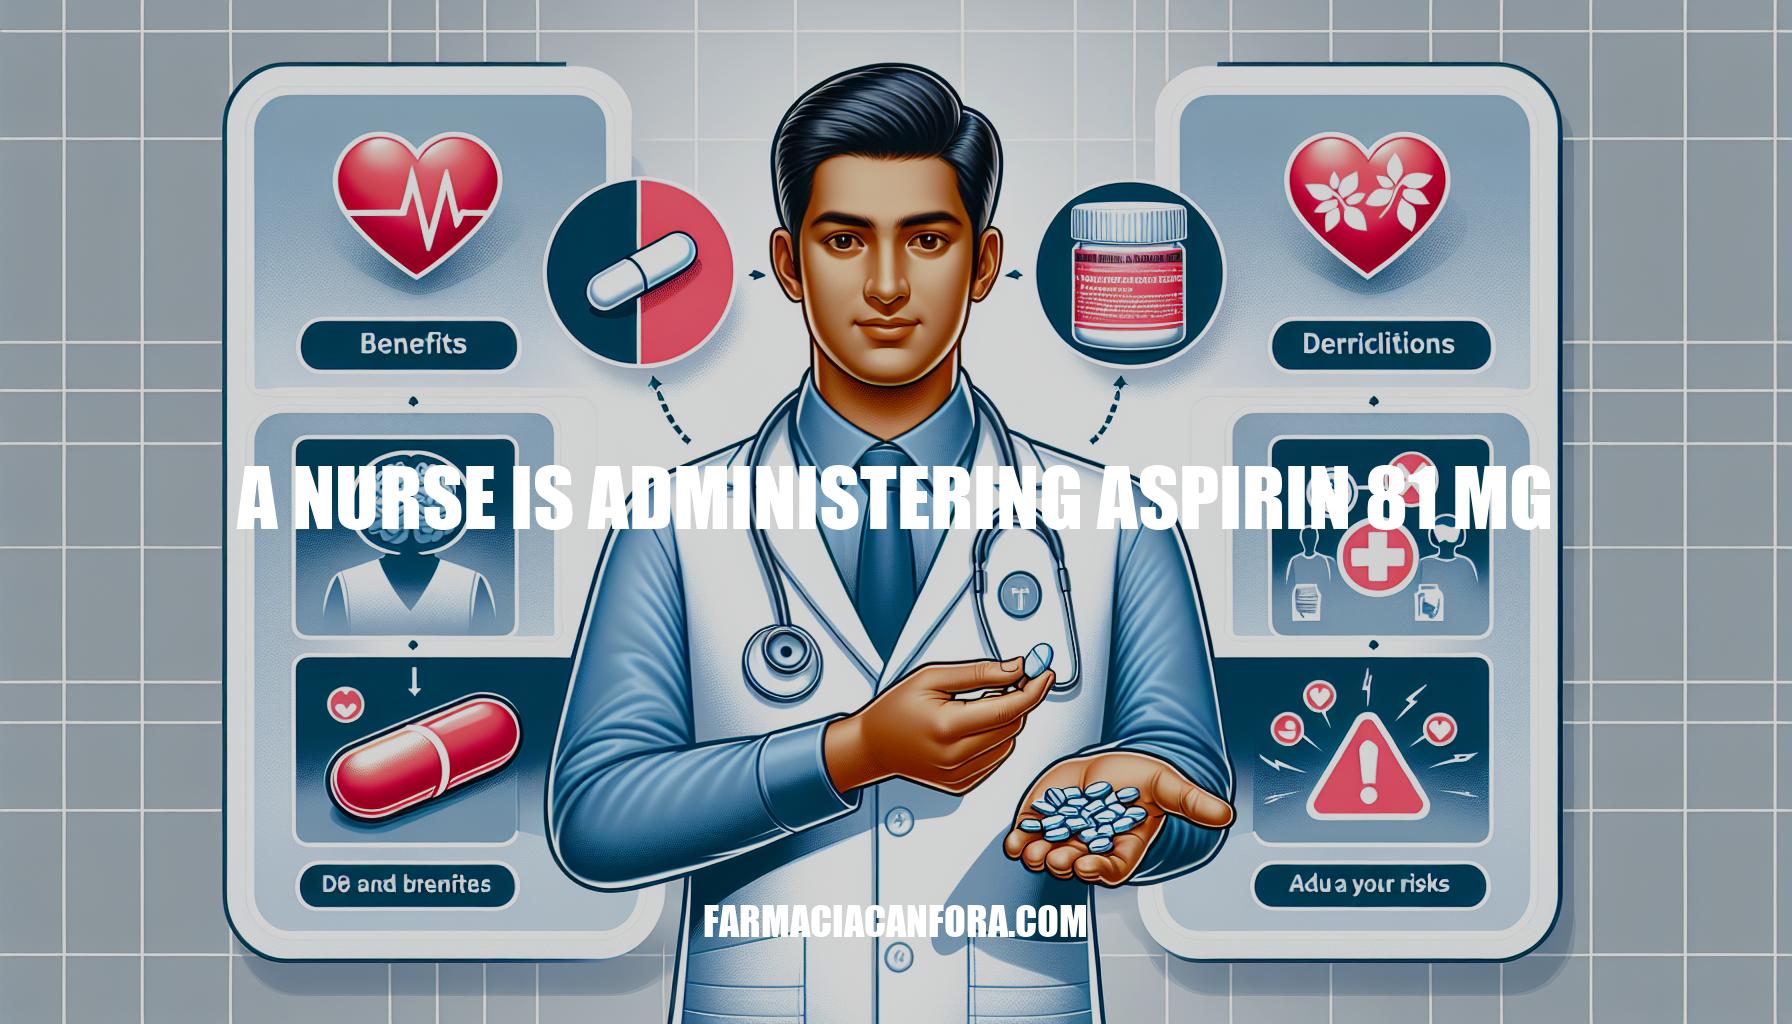 A Nurse Administering Aspirin 81 mg: Dosage, Benefits, and Risks